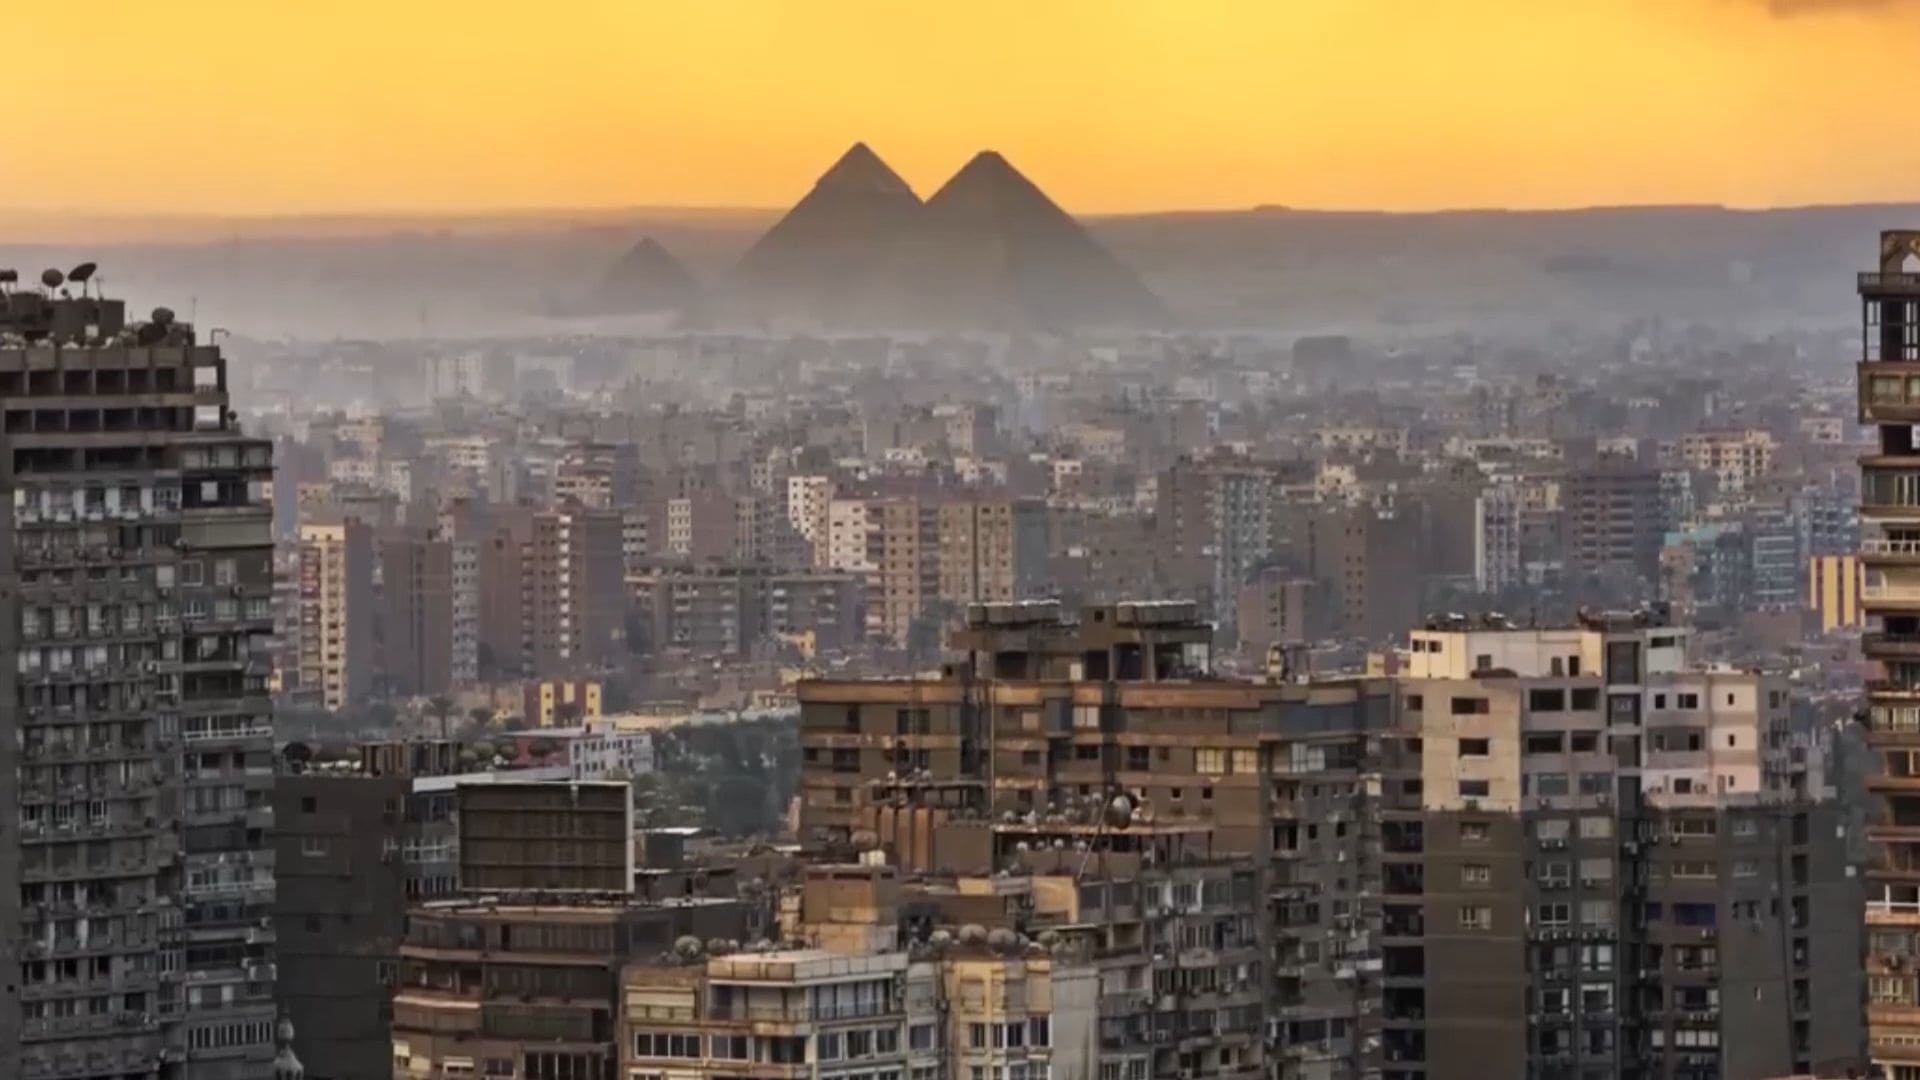 domy Káhiry s pyramídami v pozadí